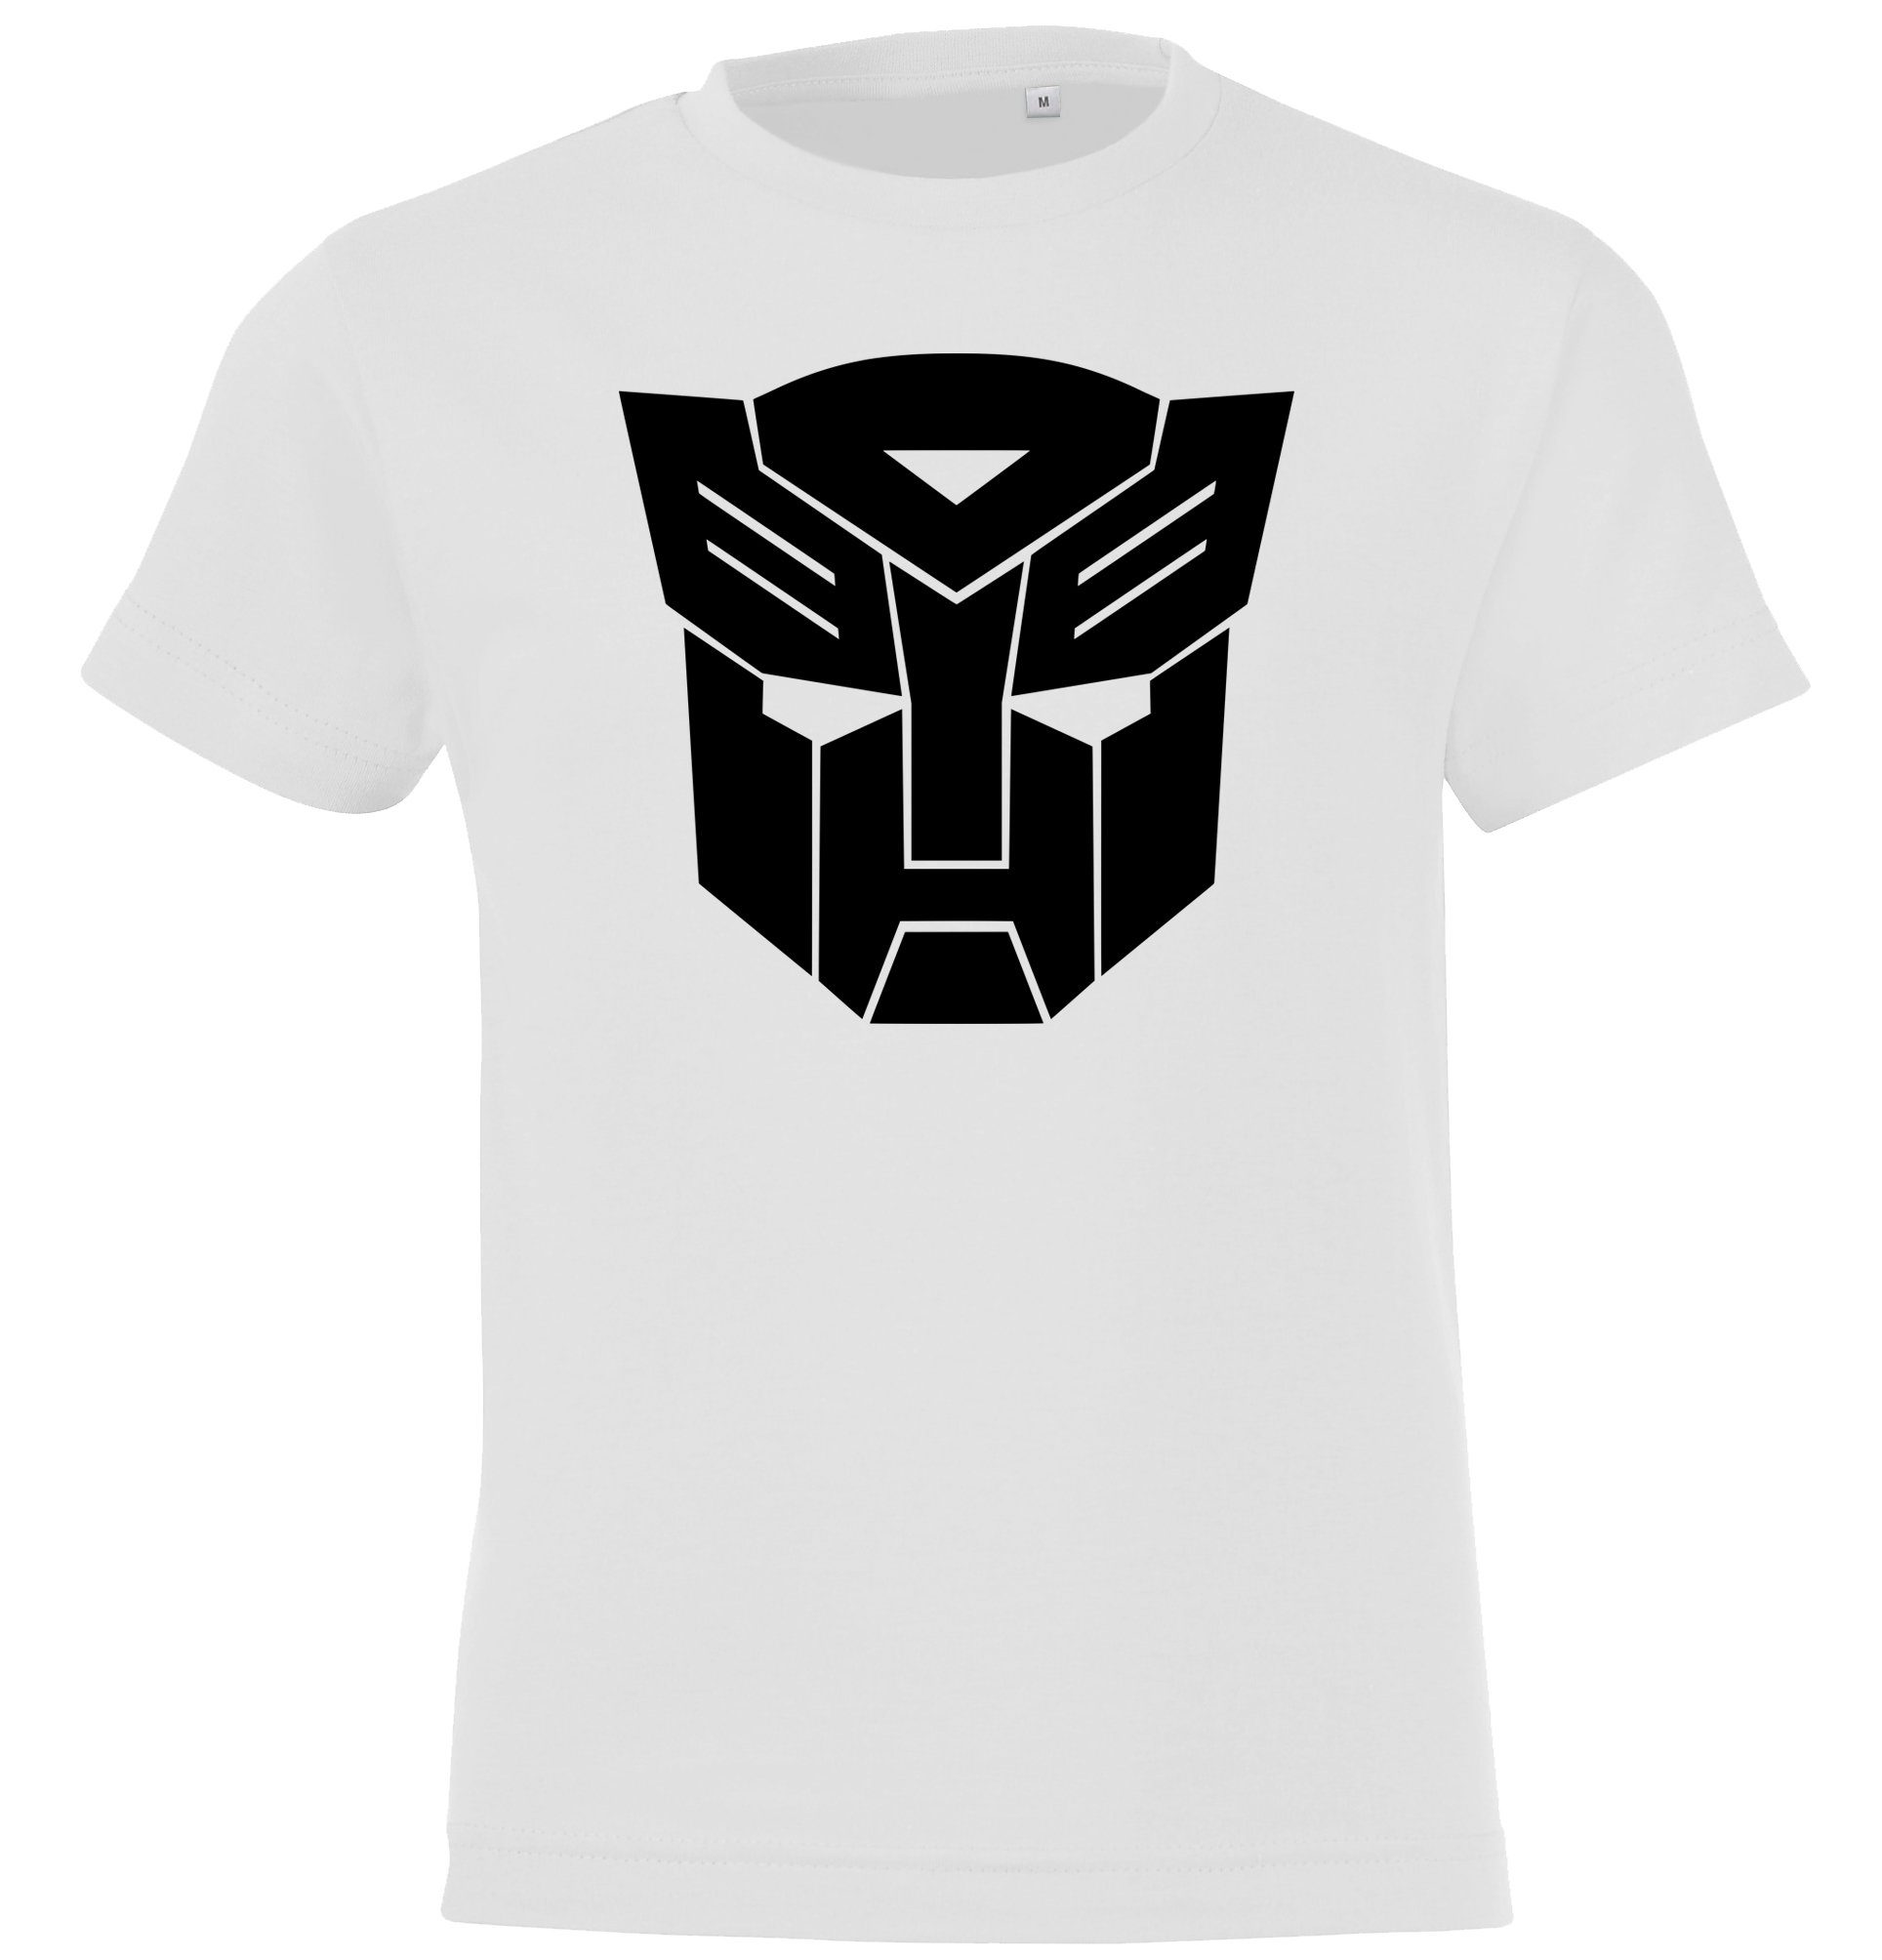 Youth Designz Kinder Autobot T-Shirt trendigem T-shirt Weiss Frontprint mit